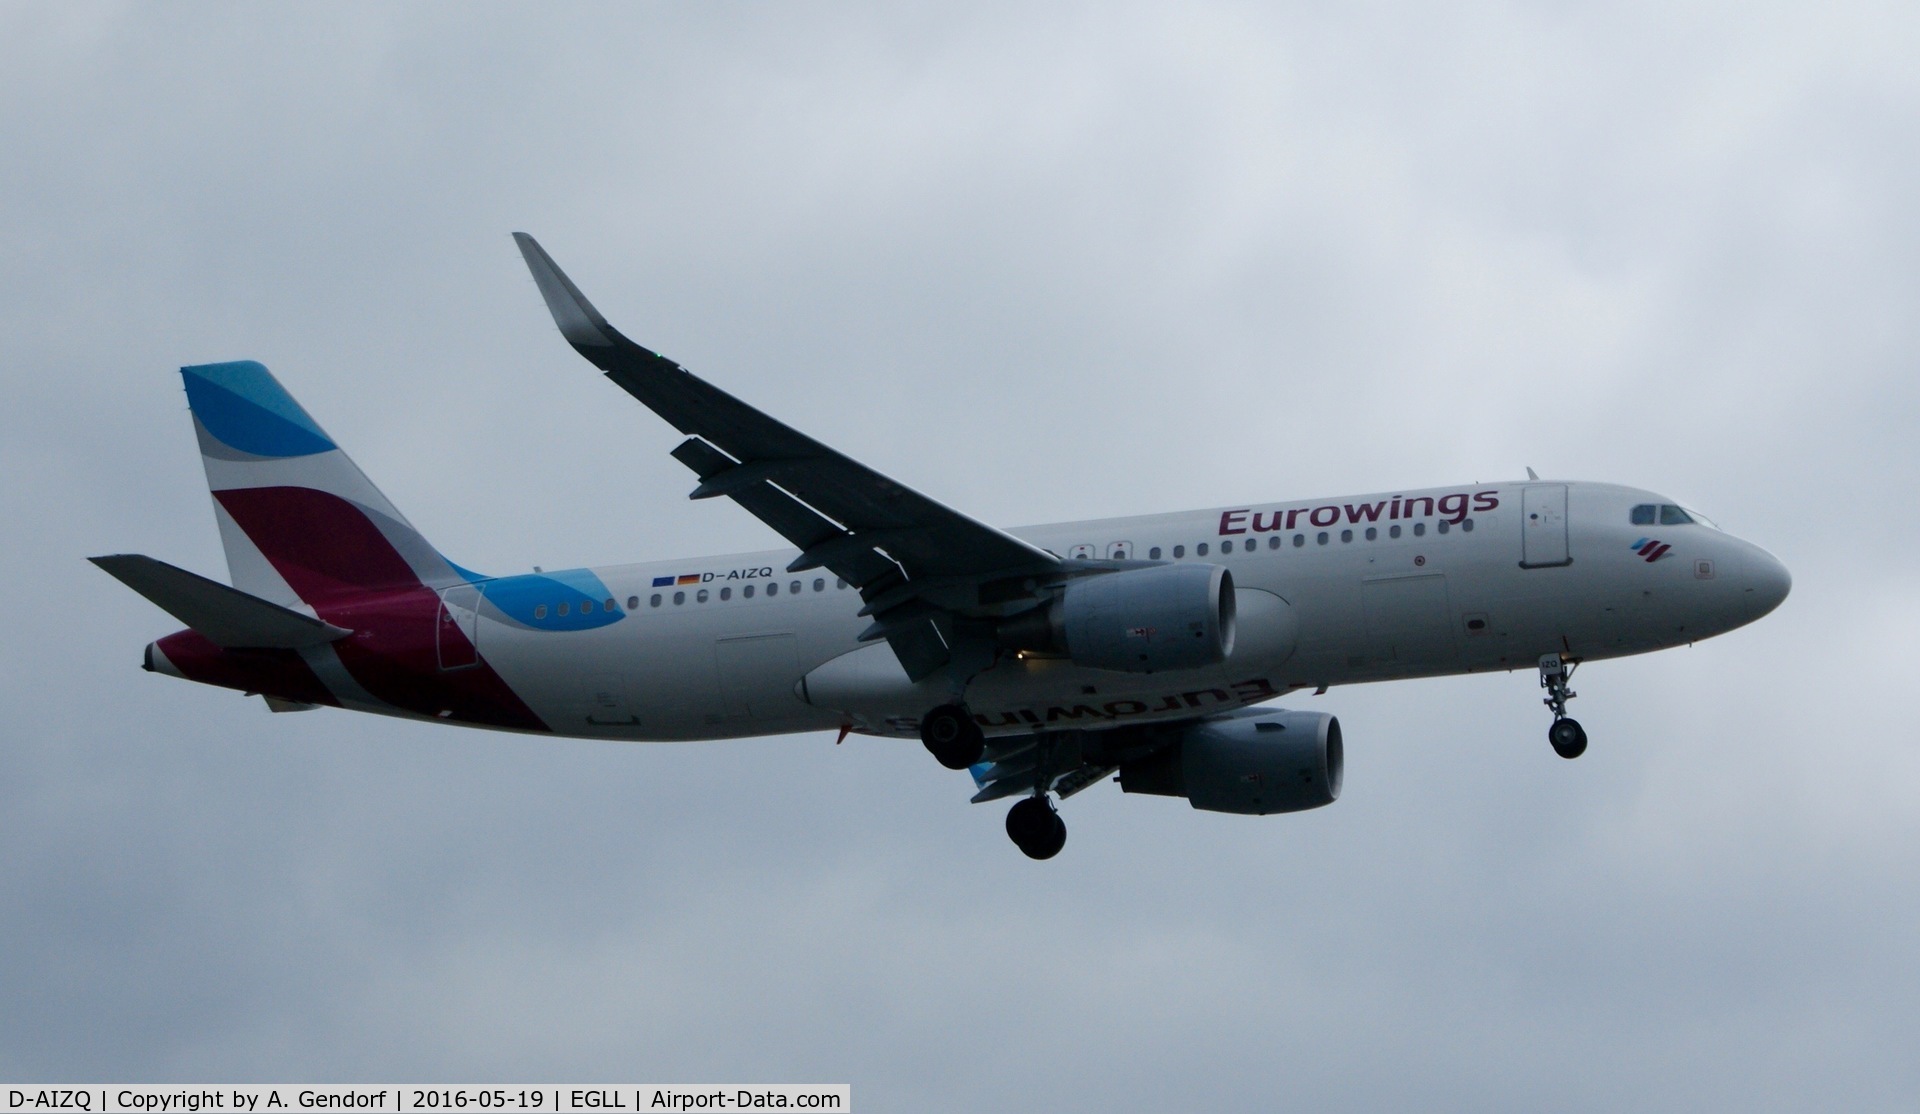 D-AIZQ, 2013 Airbus A320-214 C/N 5497, Eurowings, is here landing at London Heathrow(EGLL)